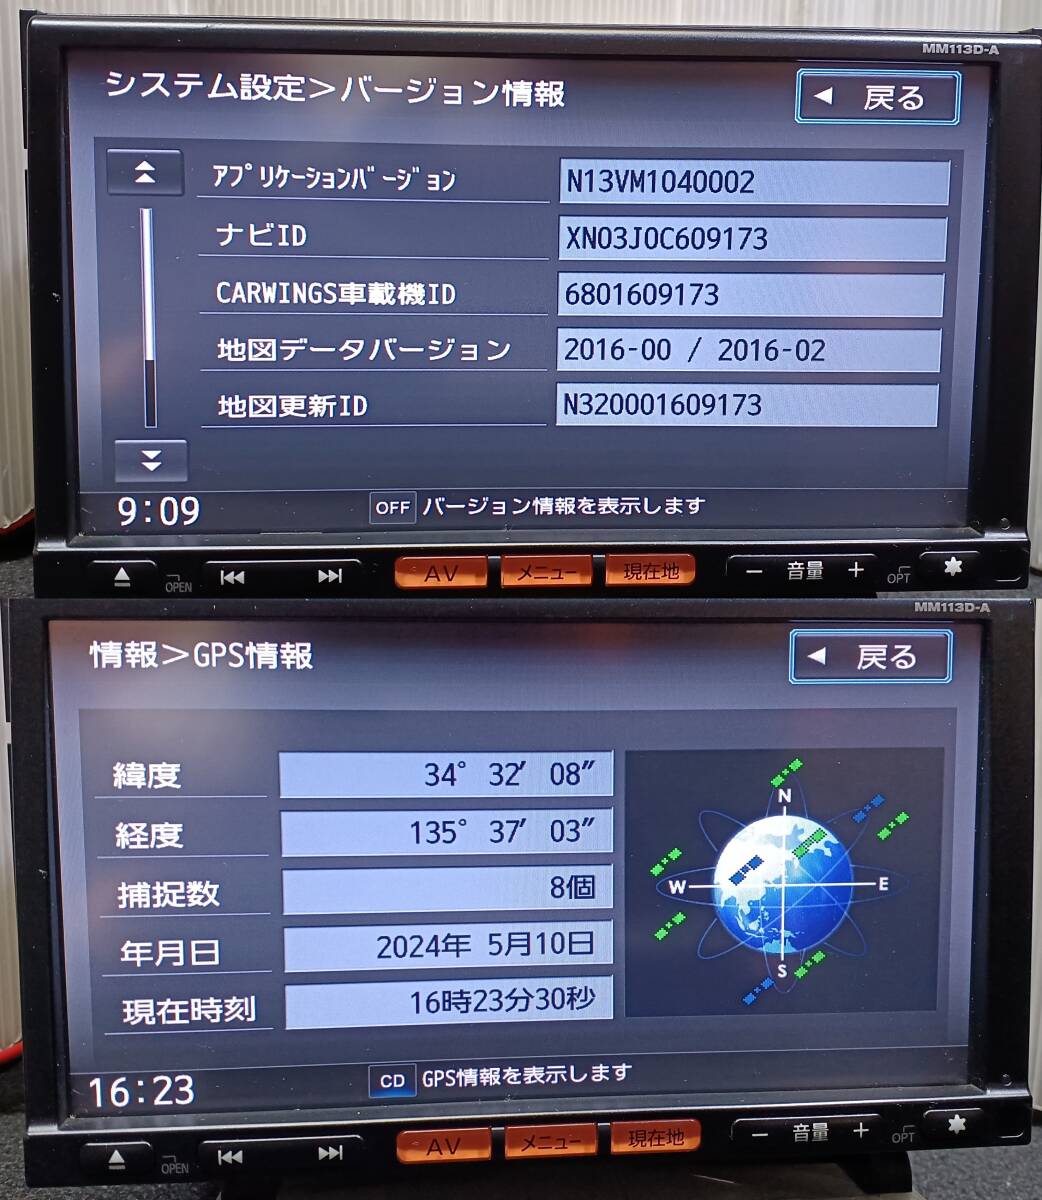 MM113D-A Nissan original navigation CD digital broadcasting SD telephone [ Mike lack of ] map data VERSION (2016-00 / 2016-02) Panasonic B8260-79922 CQ-XN03J0CJA